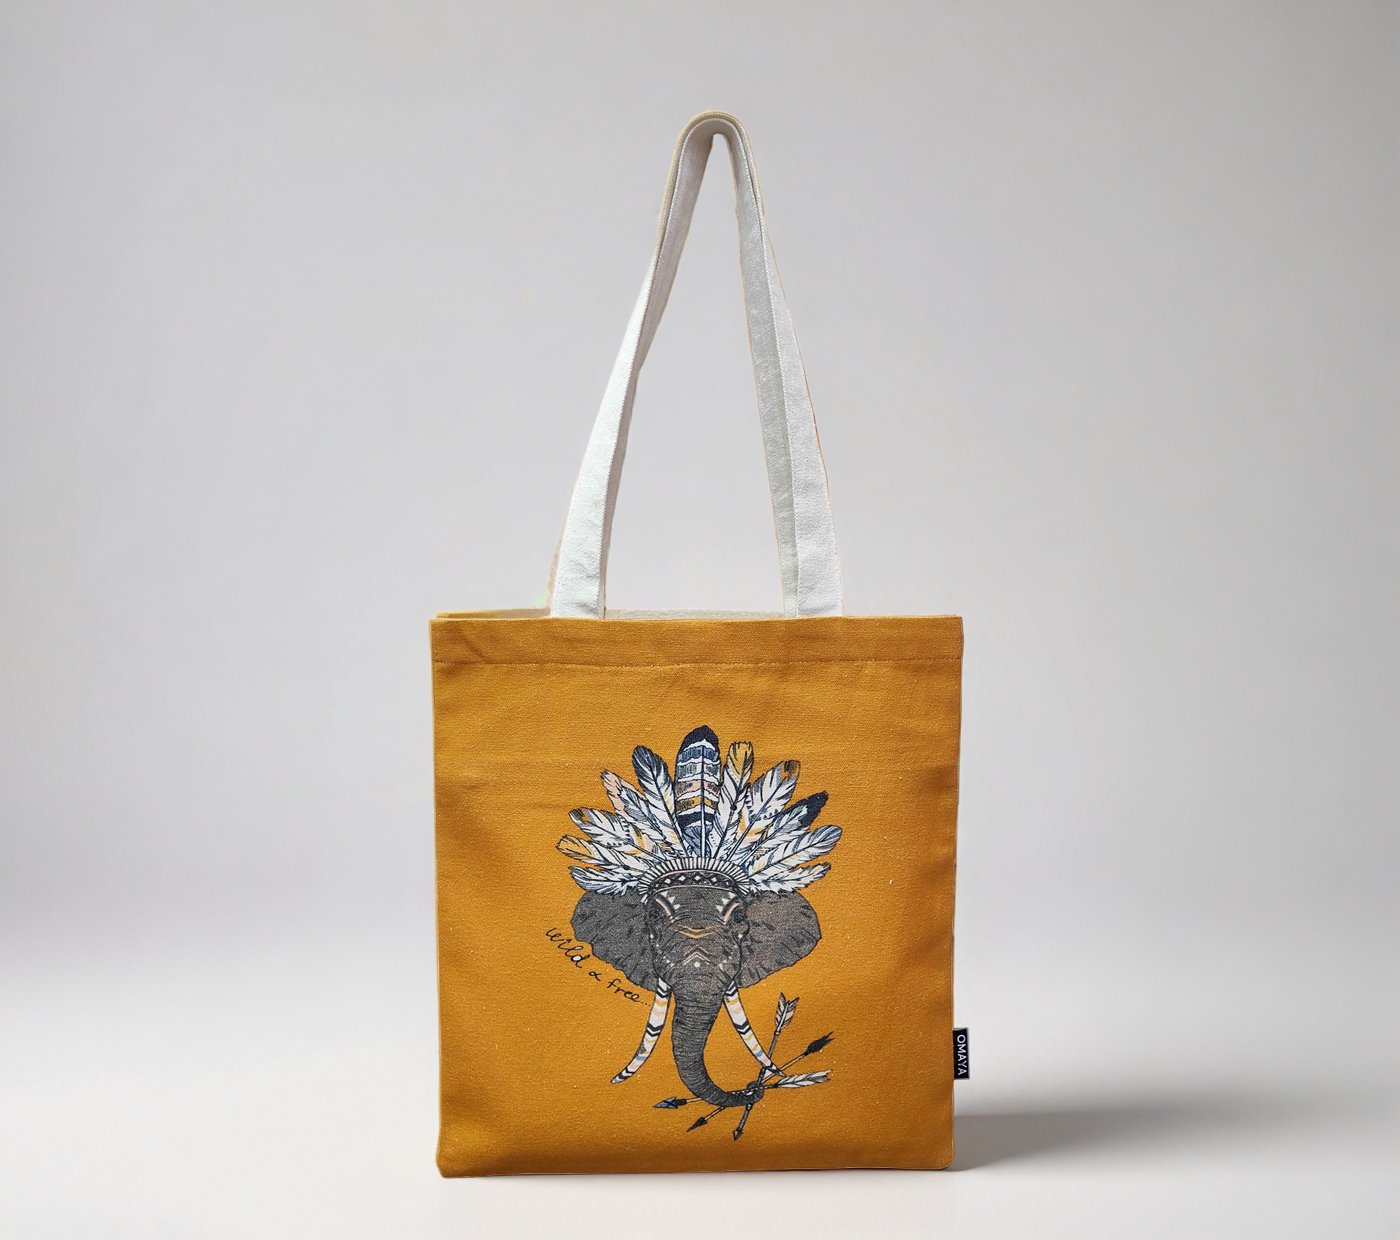 Tribal Elephant print Cotton Canvas Tote Bag 34×36 Cms